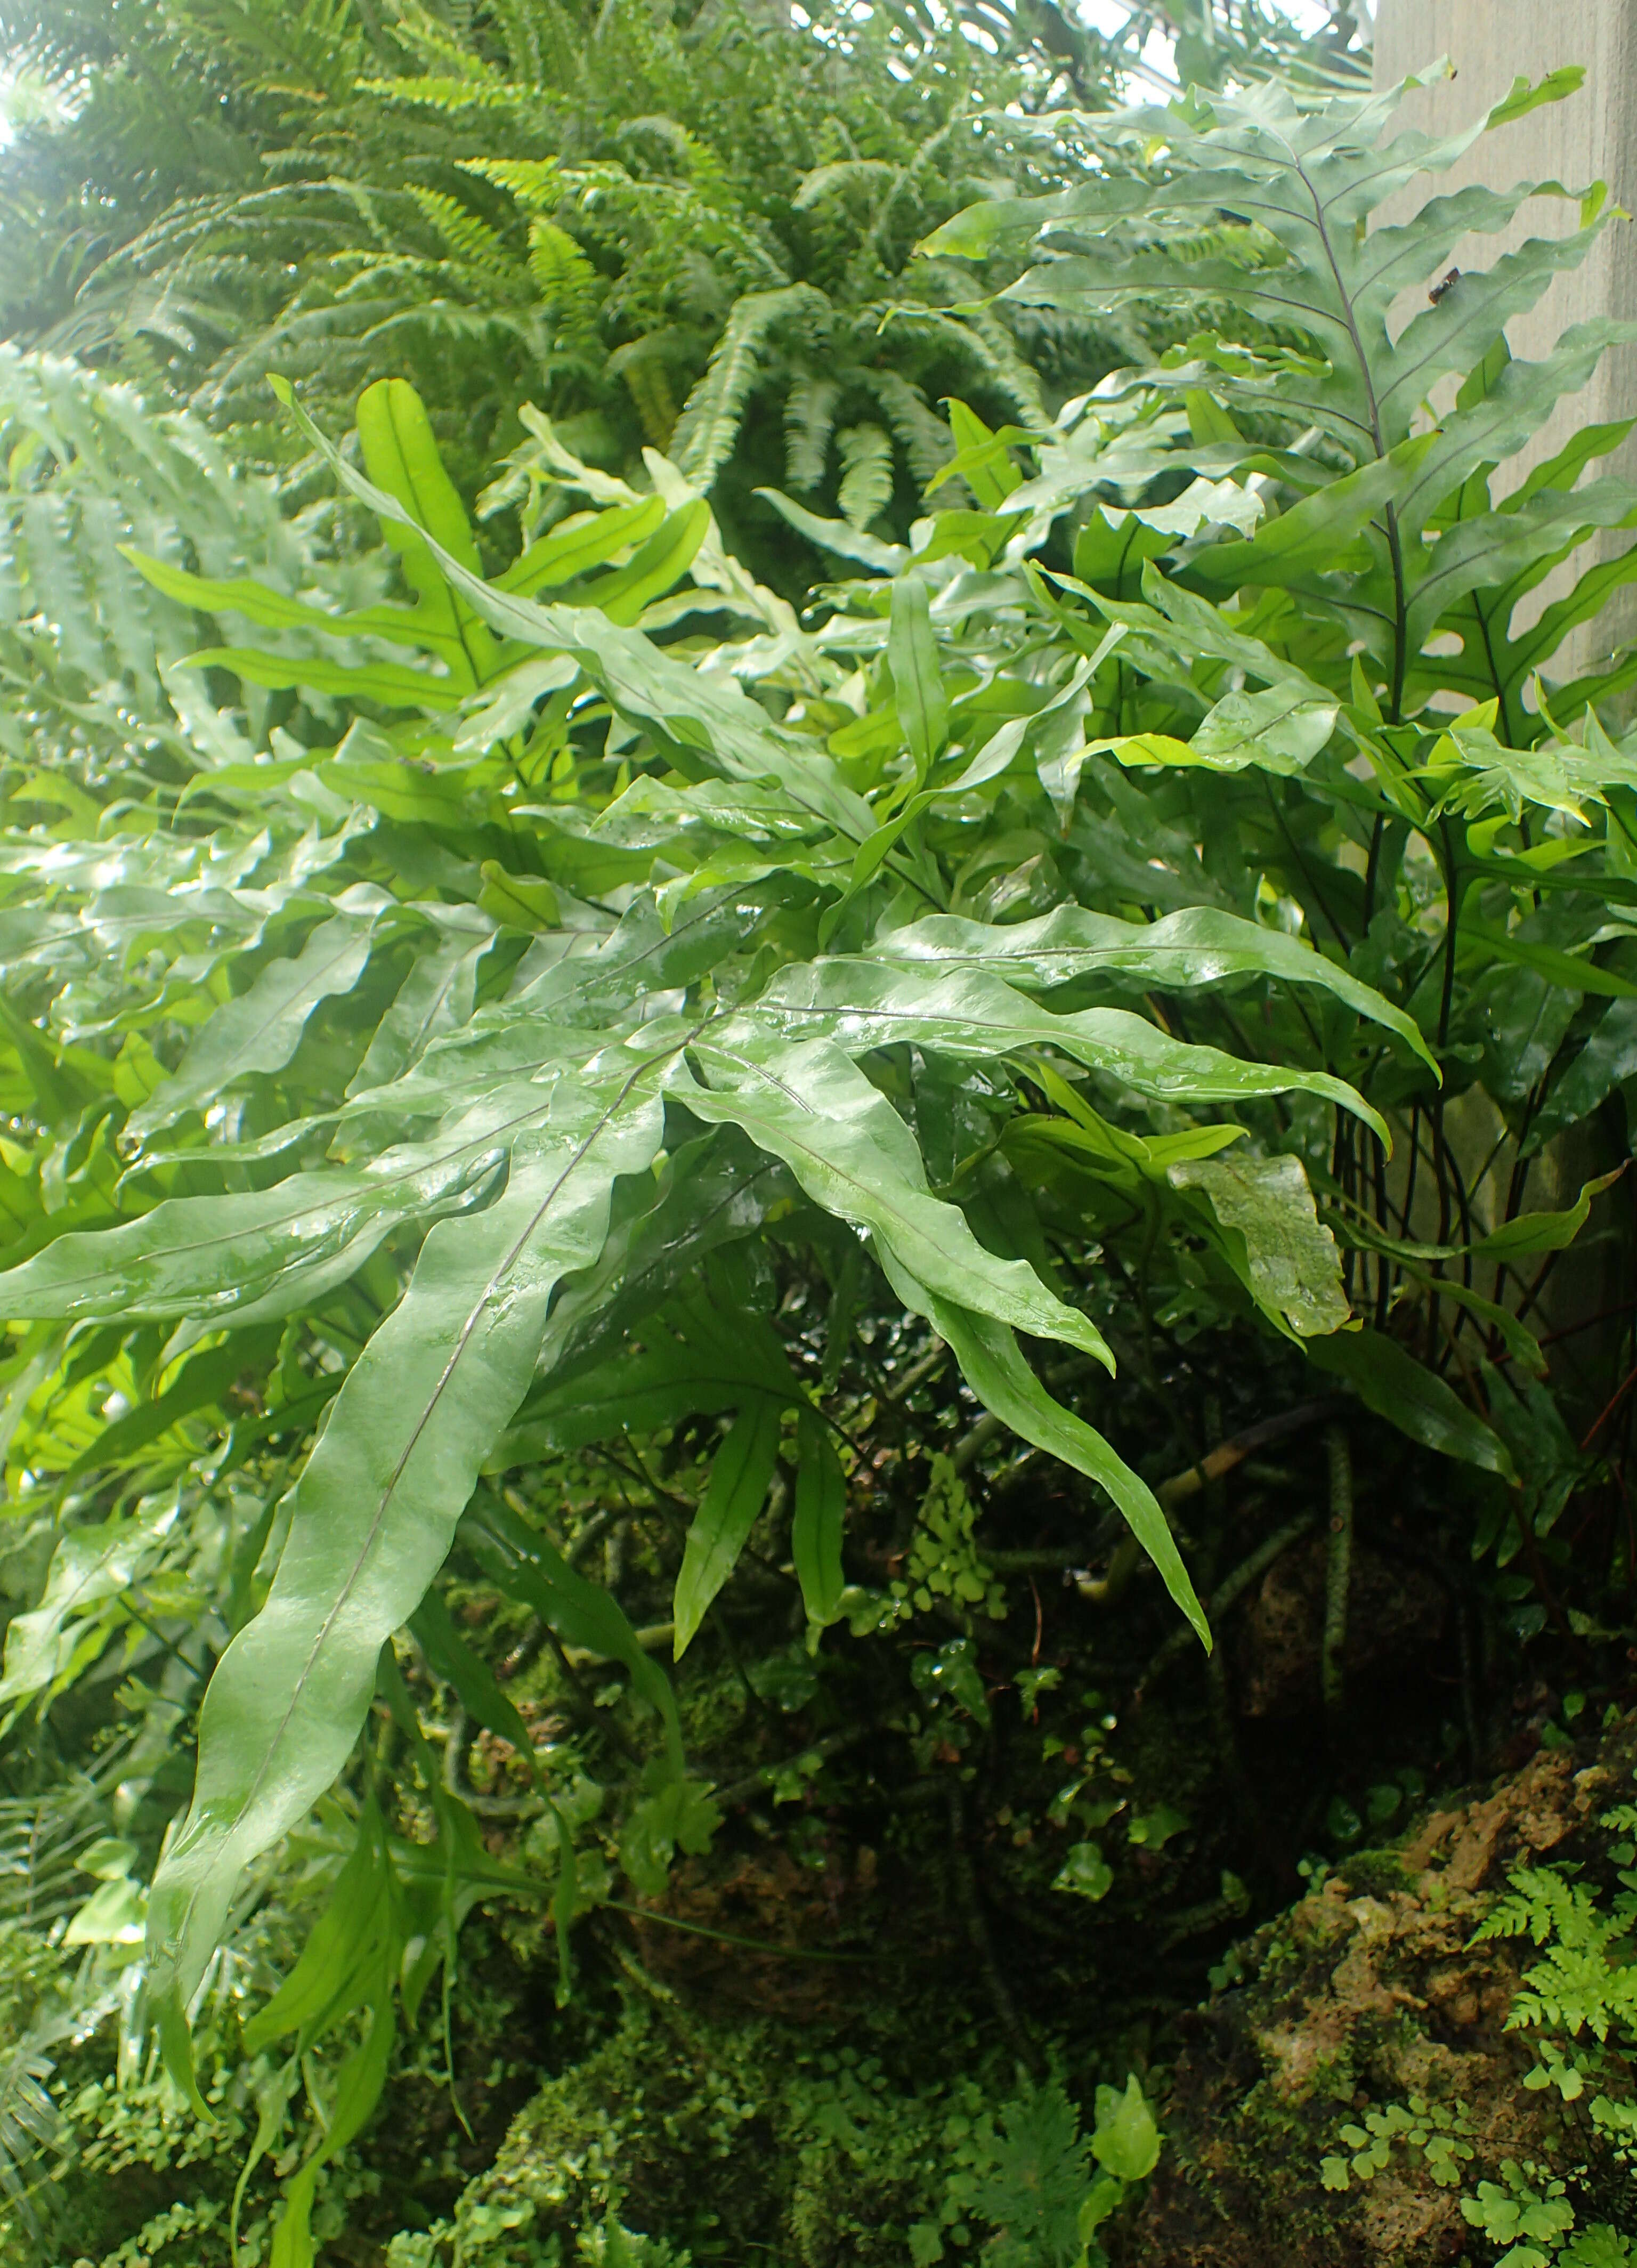 Image of monarch fern